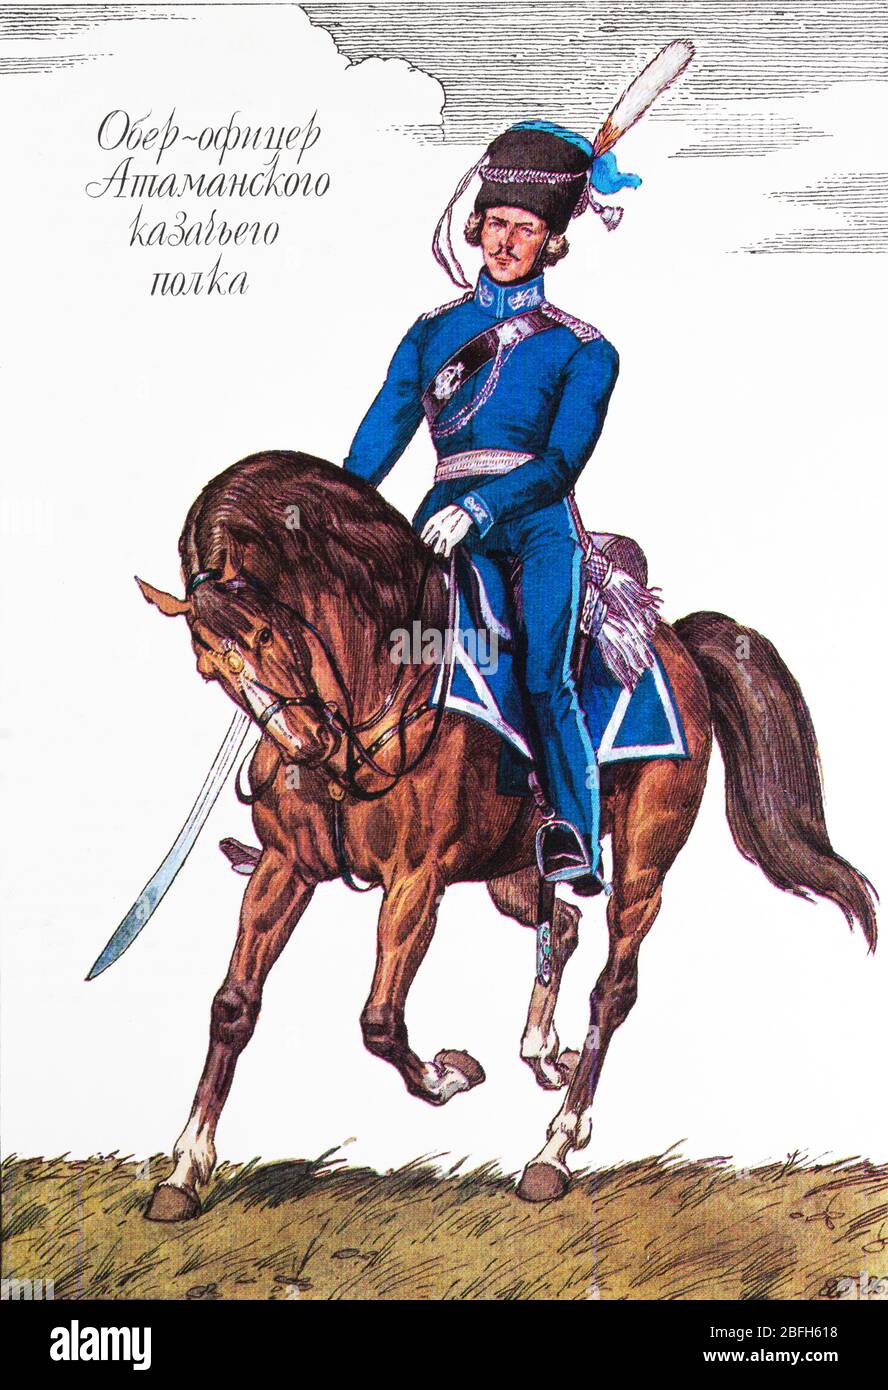 Ataman cossack cavalry regiment petty officer, 1812, 19th century Russian army uniform, Russia Stock Photo